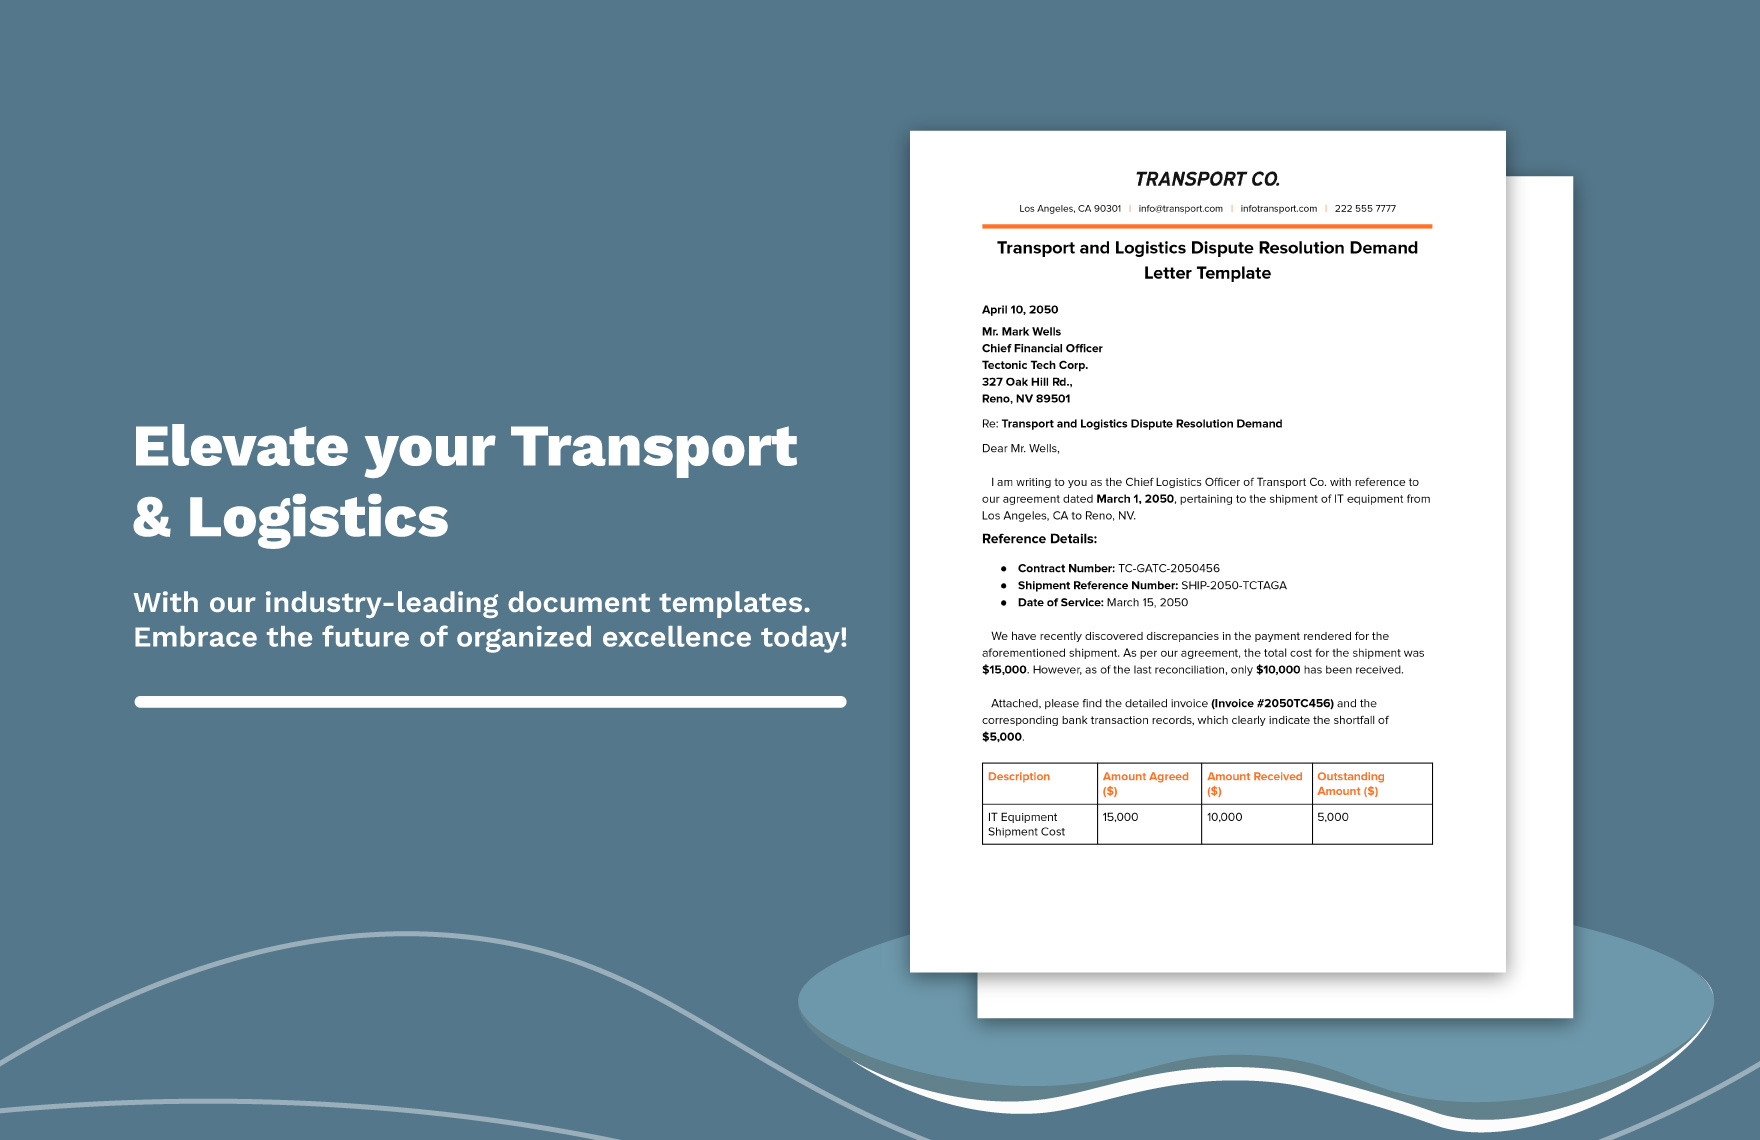 Transport and Logistics Dispute Resolution Demand Letter Template